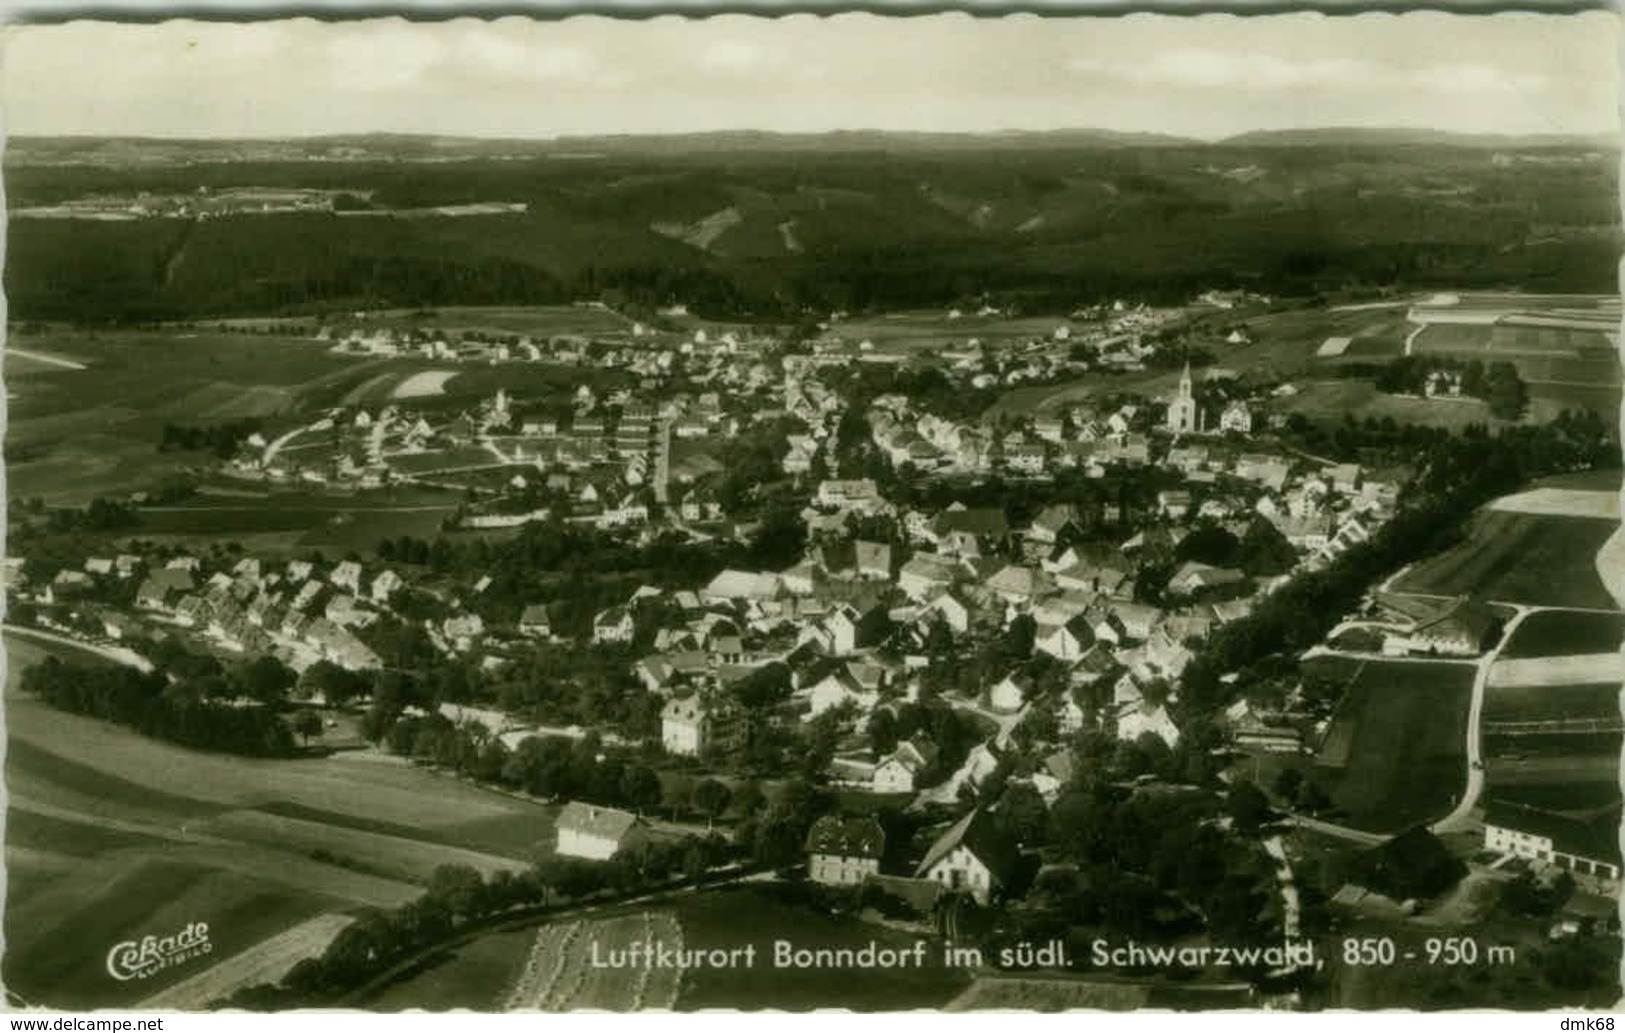 AK GERMANY - LUFTKURORT BONNDORF IM SUDL. SCHWARZWALD - EDIT SPACHHOLZ & EHRATH - 1950s  (BG9561) - Bonndorf